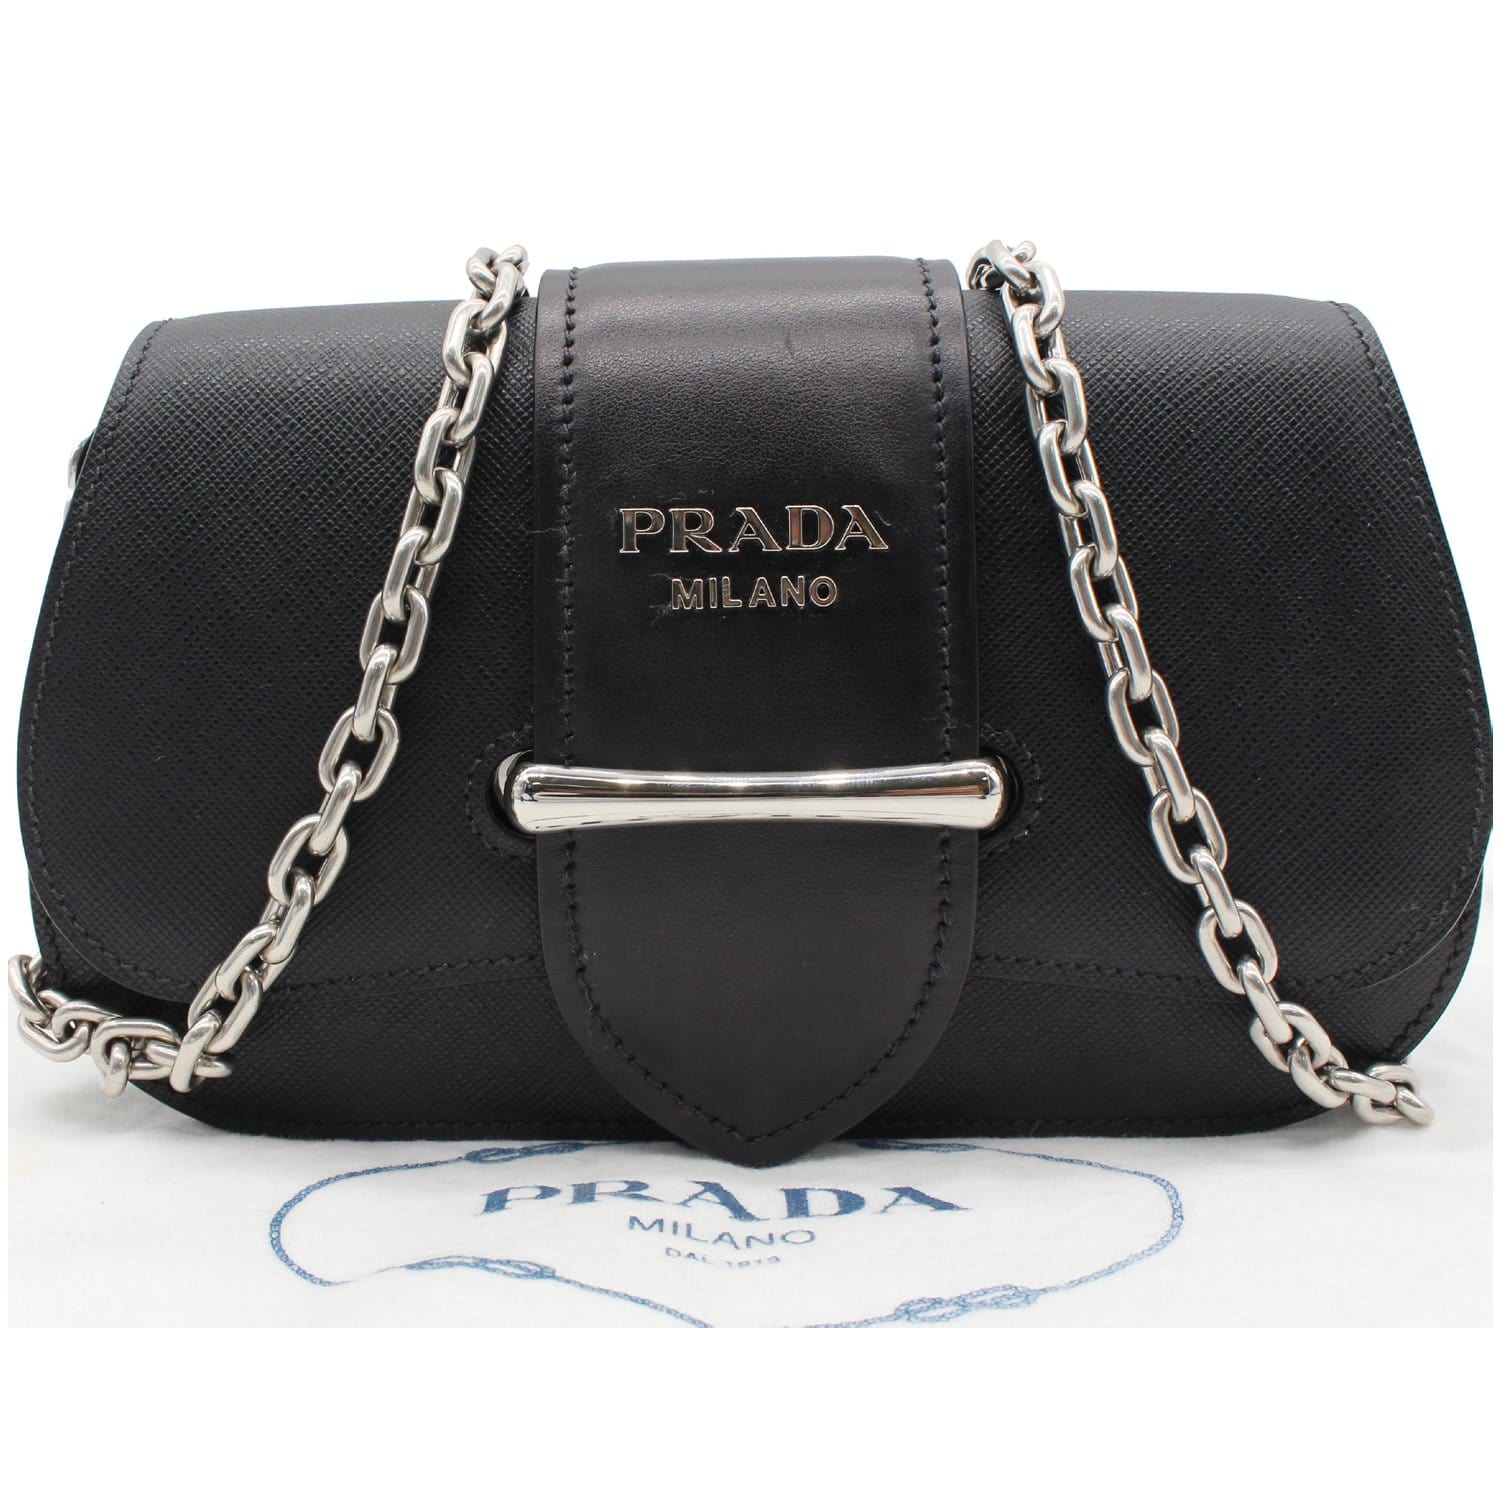 PRADA City Sidonie Small Leather Crossbody Bag Black/White - Last Call